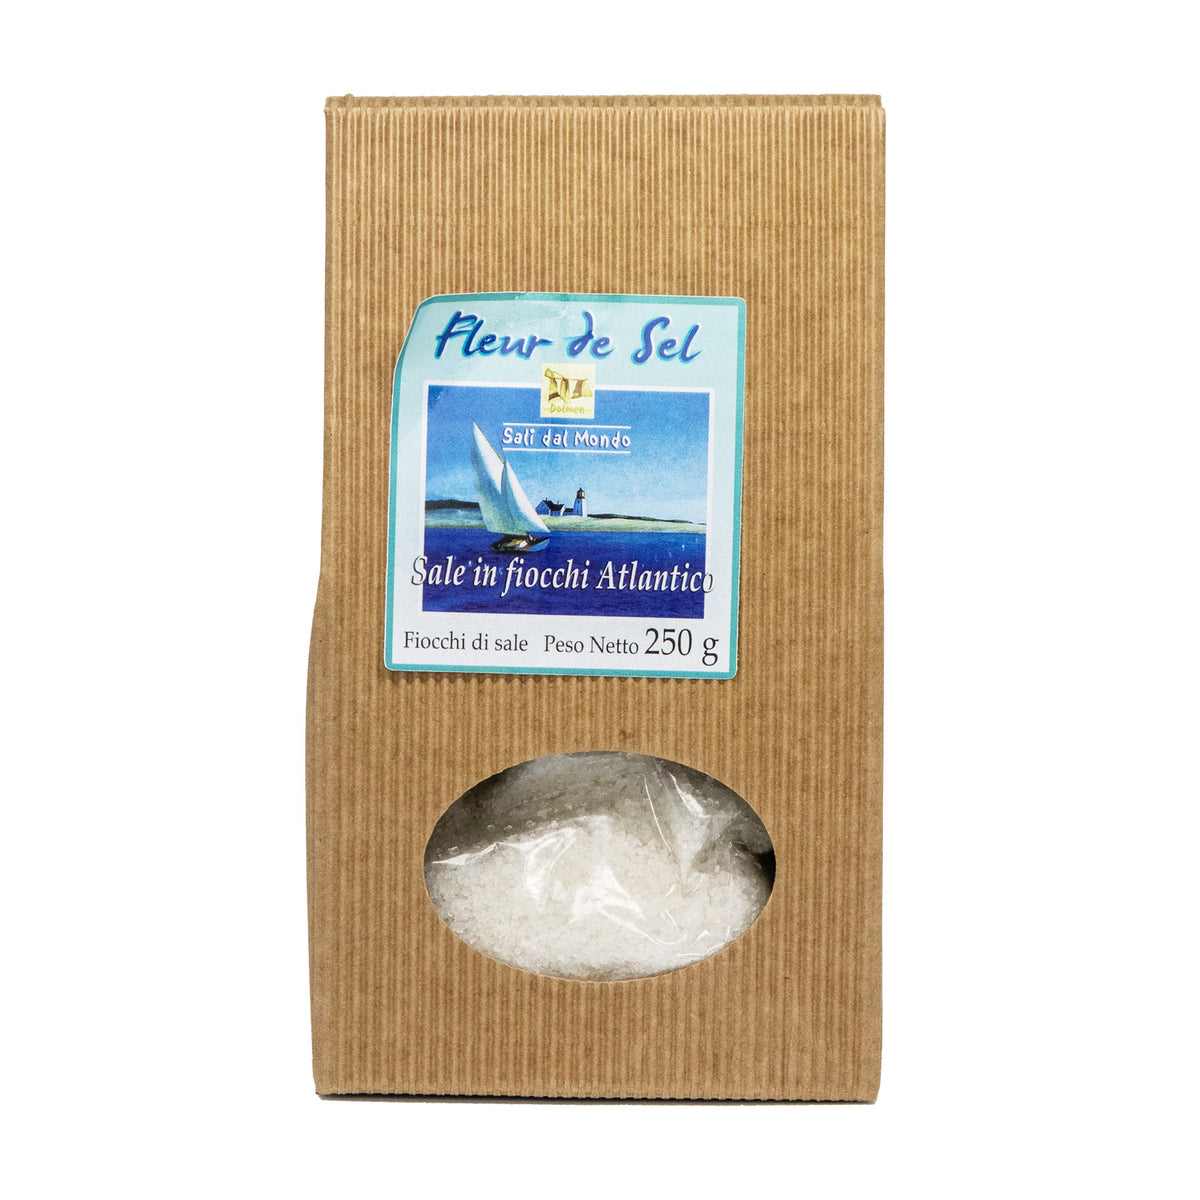 Fleur de Sel - Crystallized Salt 1 kg